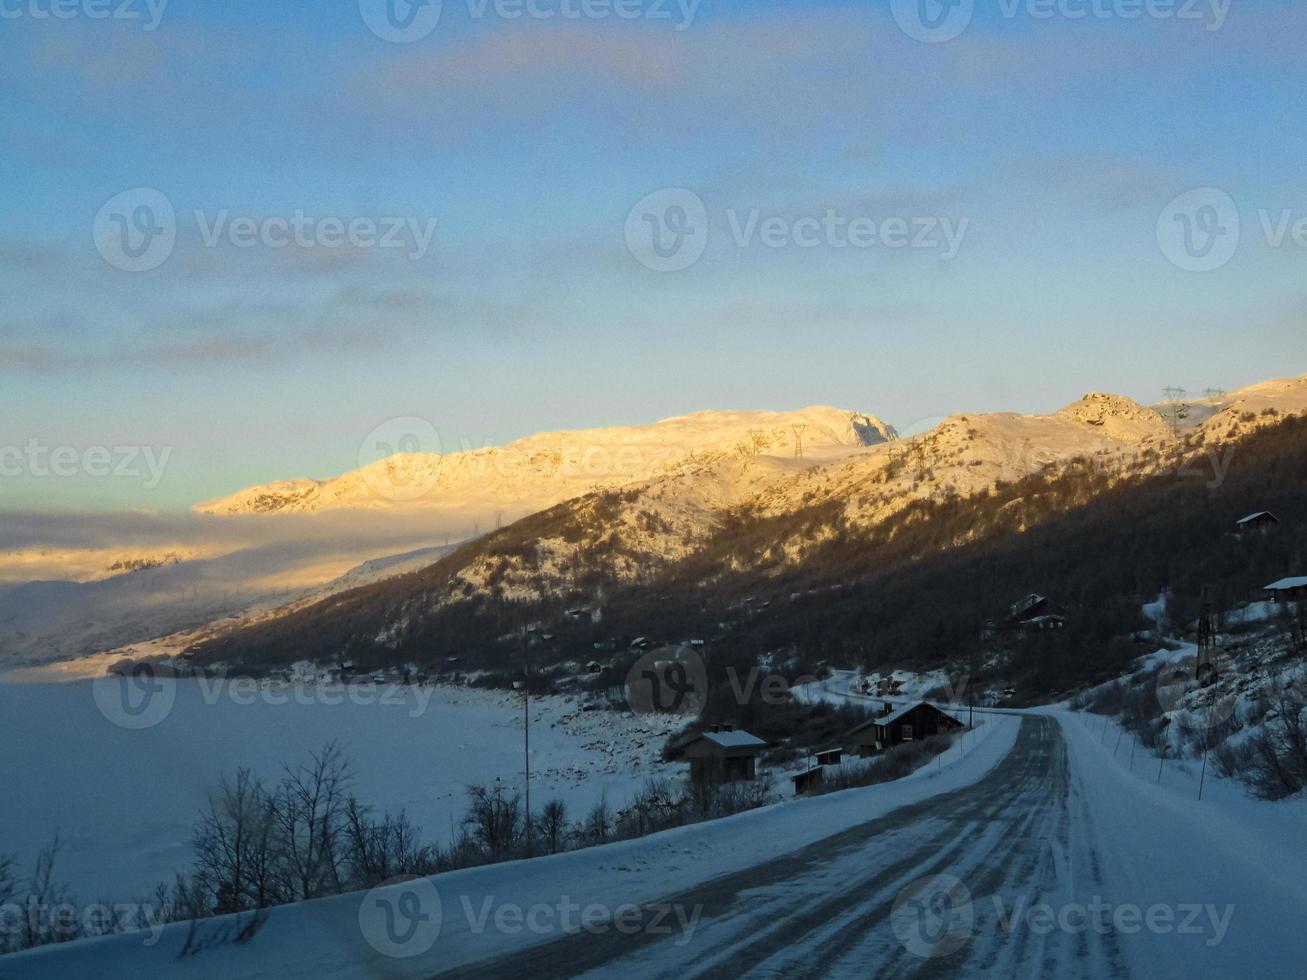 fahren bei goldenem sonnenaufgang durch berge und dörfer in norwegen. foto